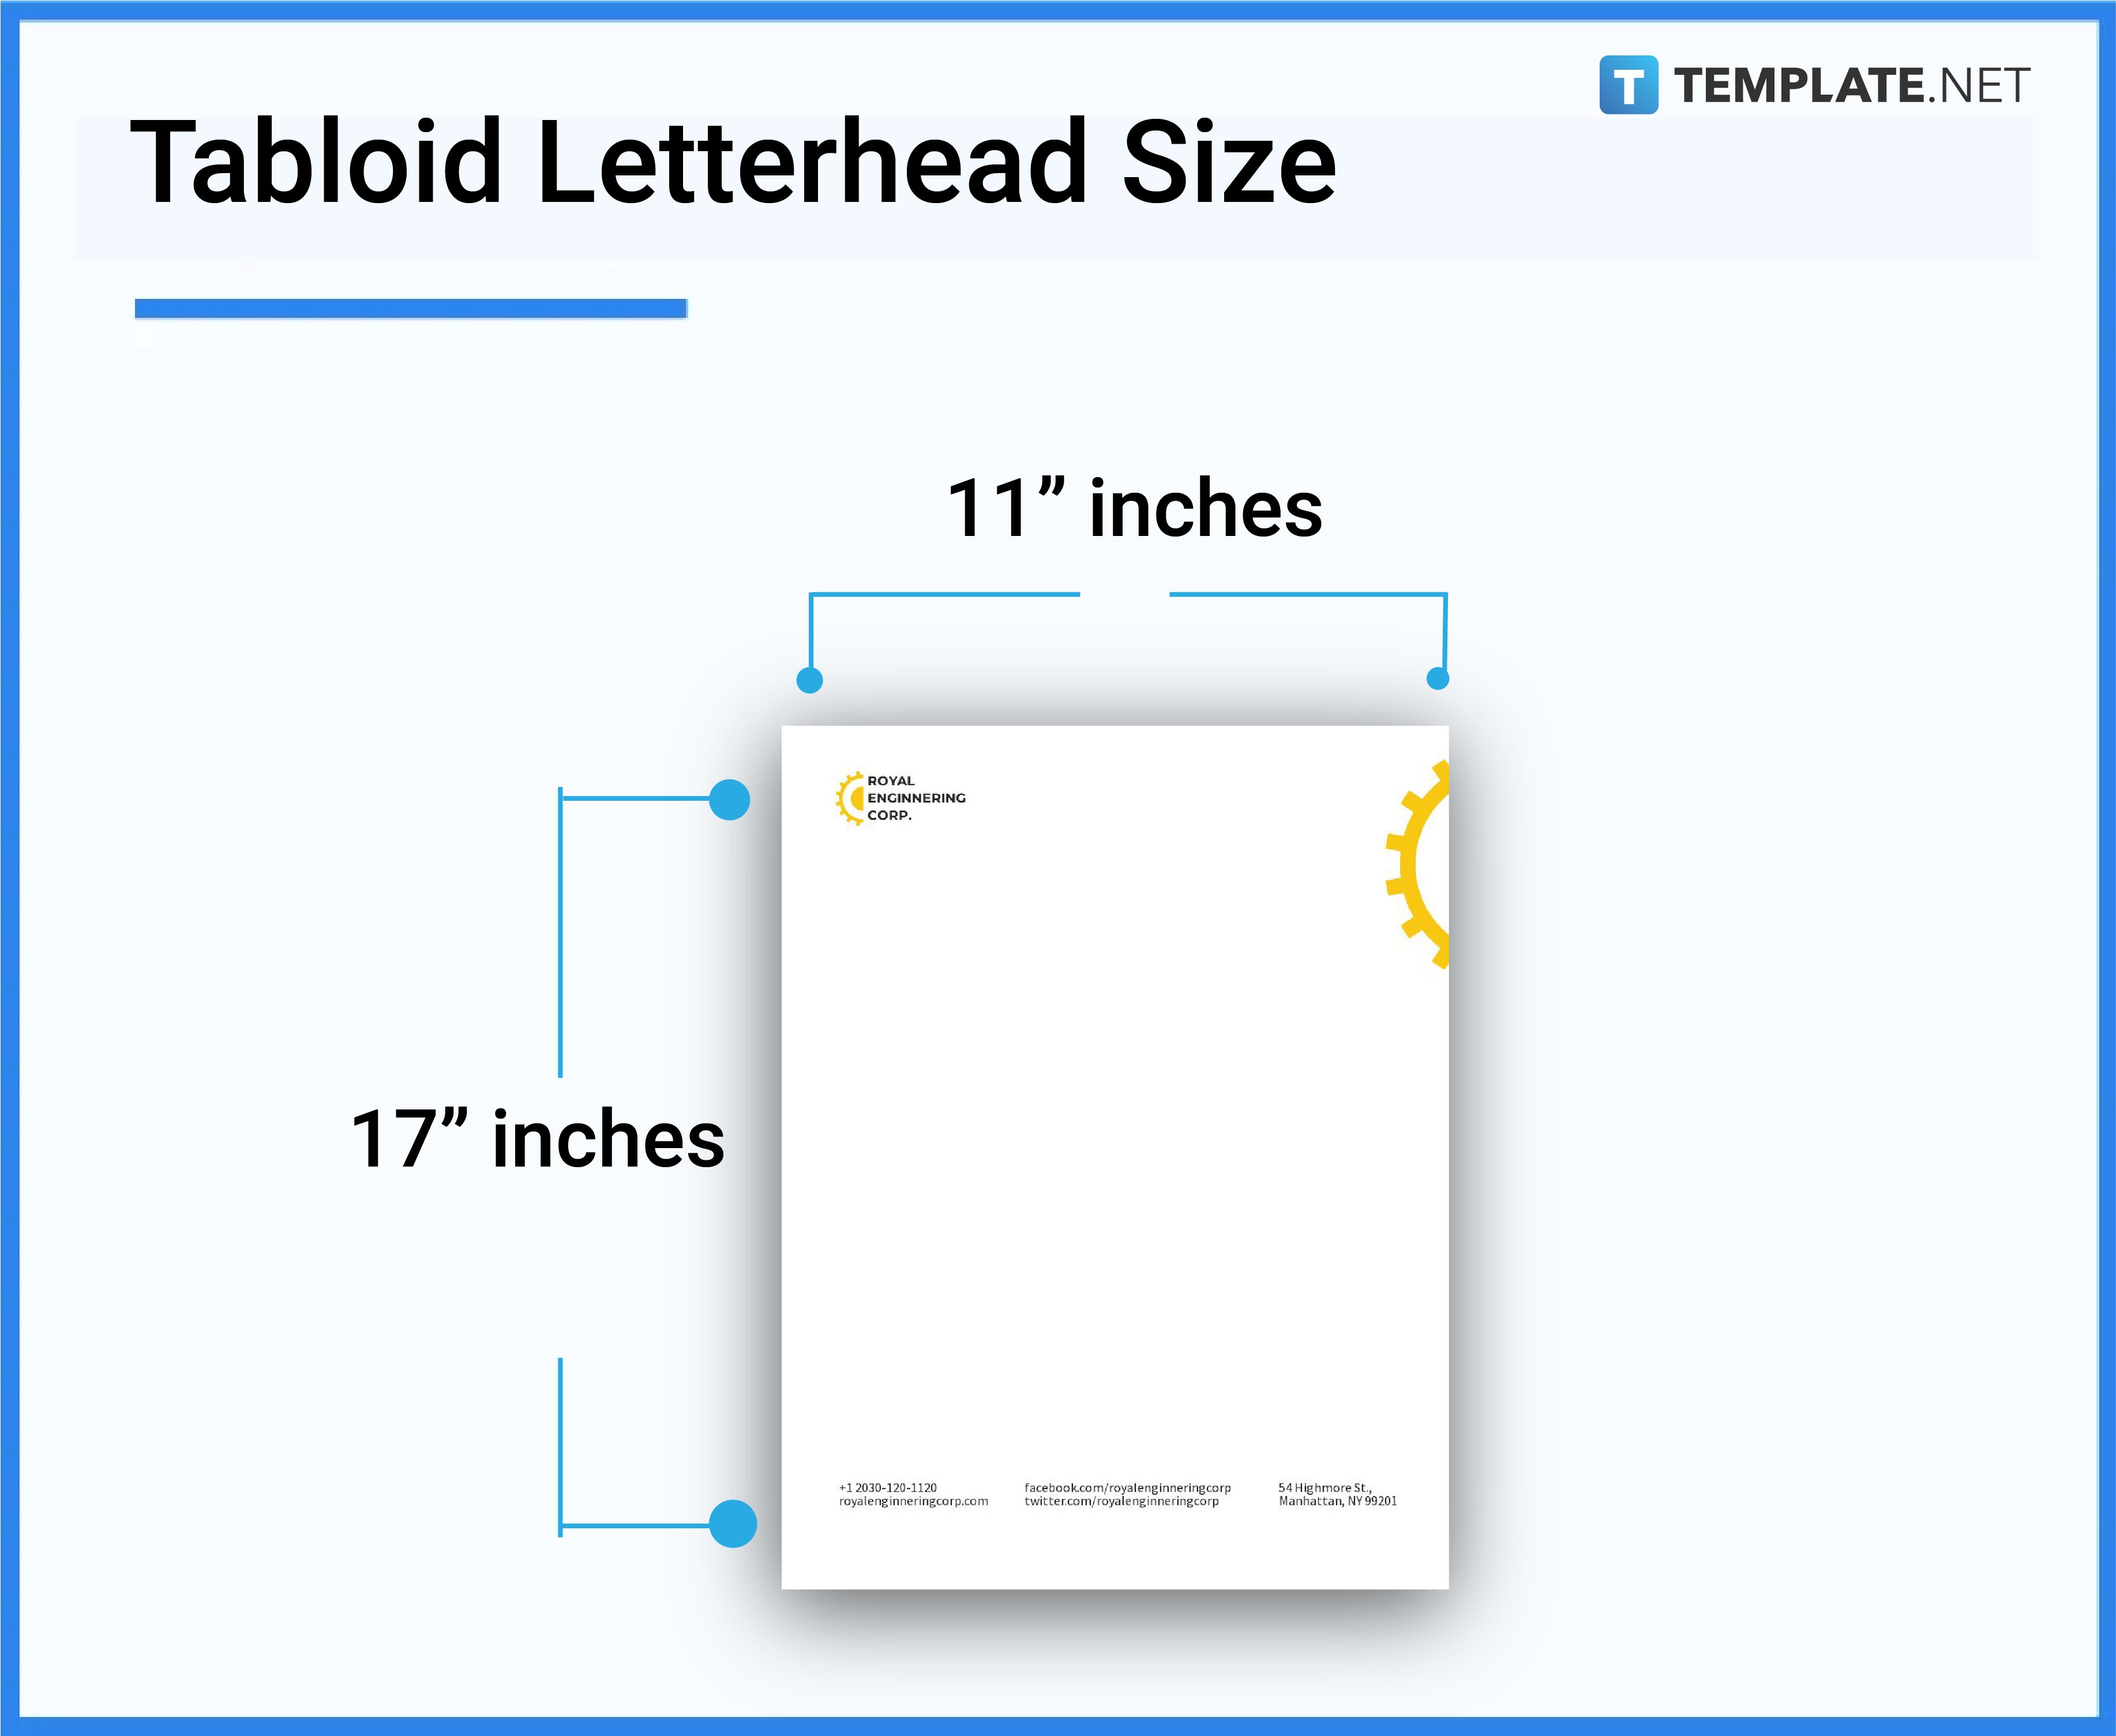 tabloid letterhead size